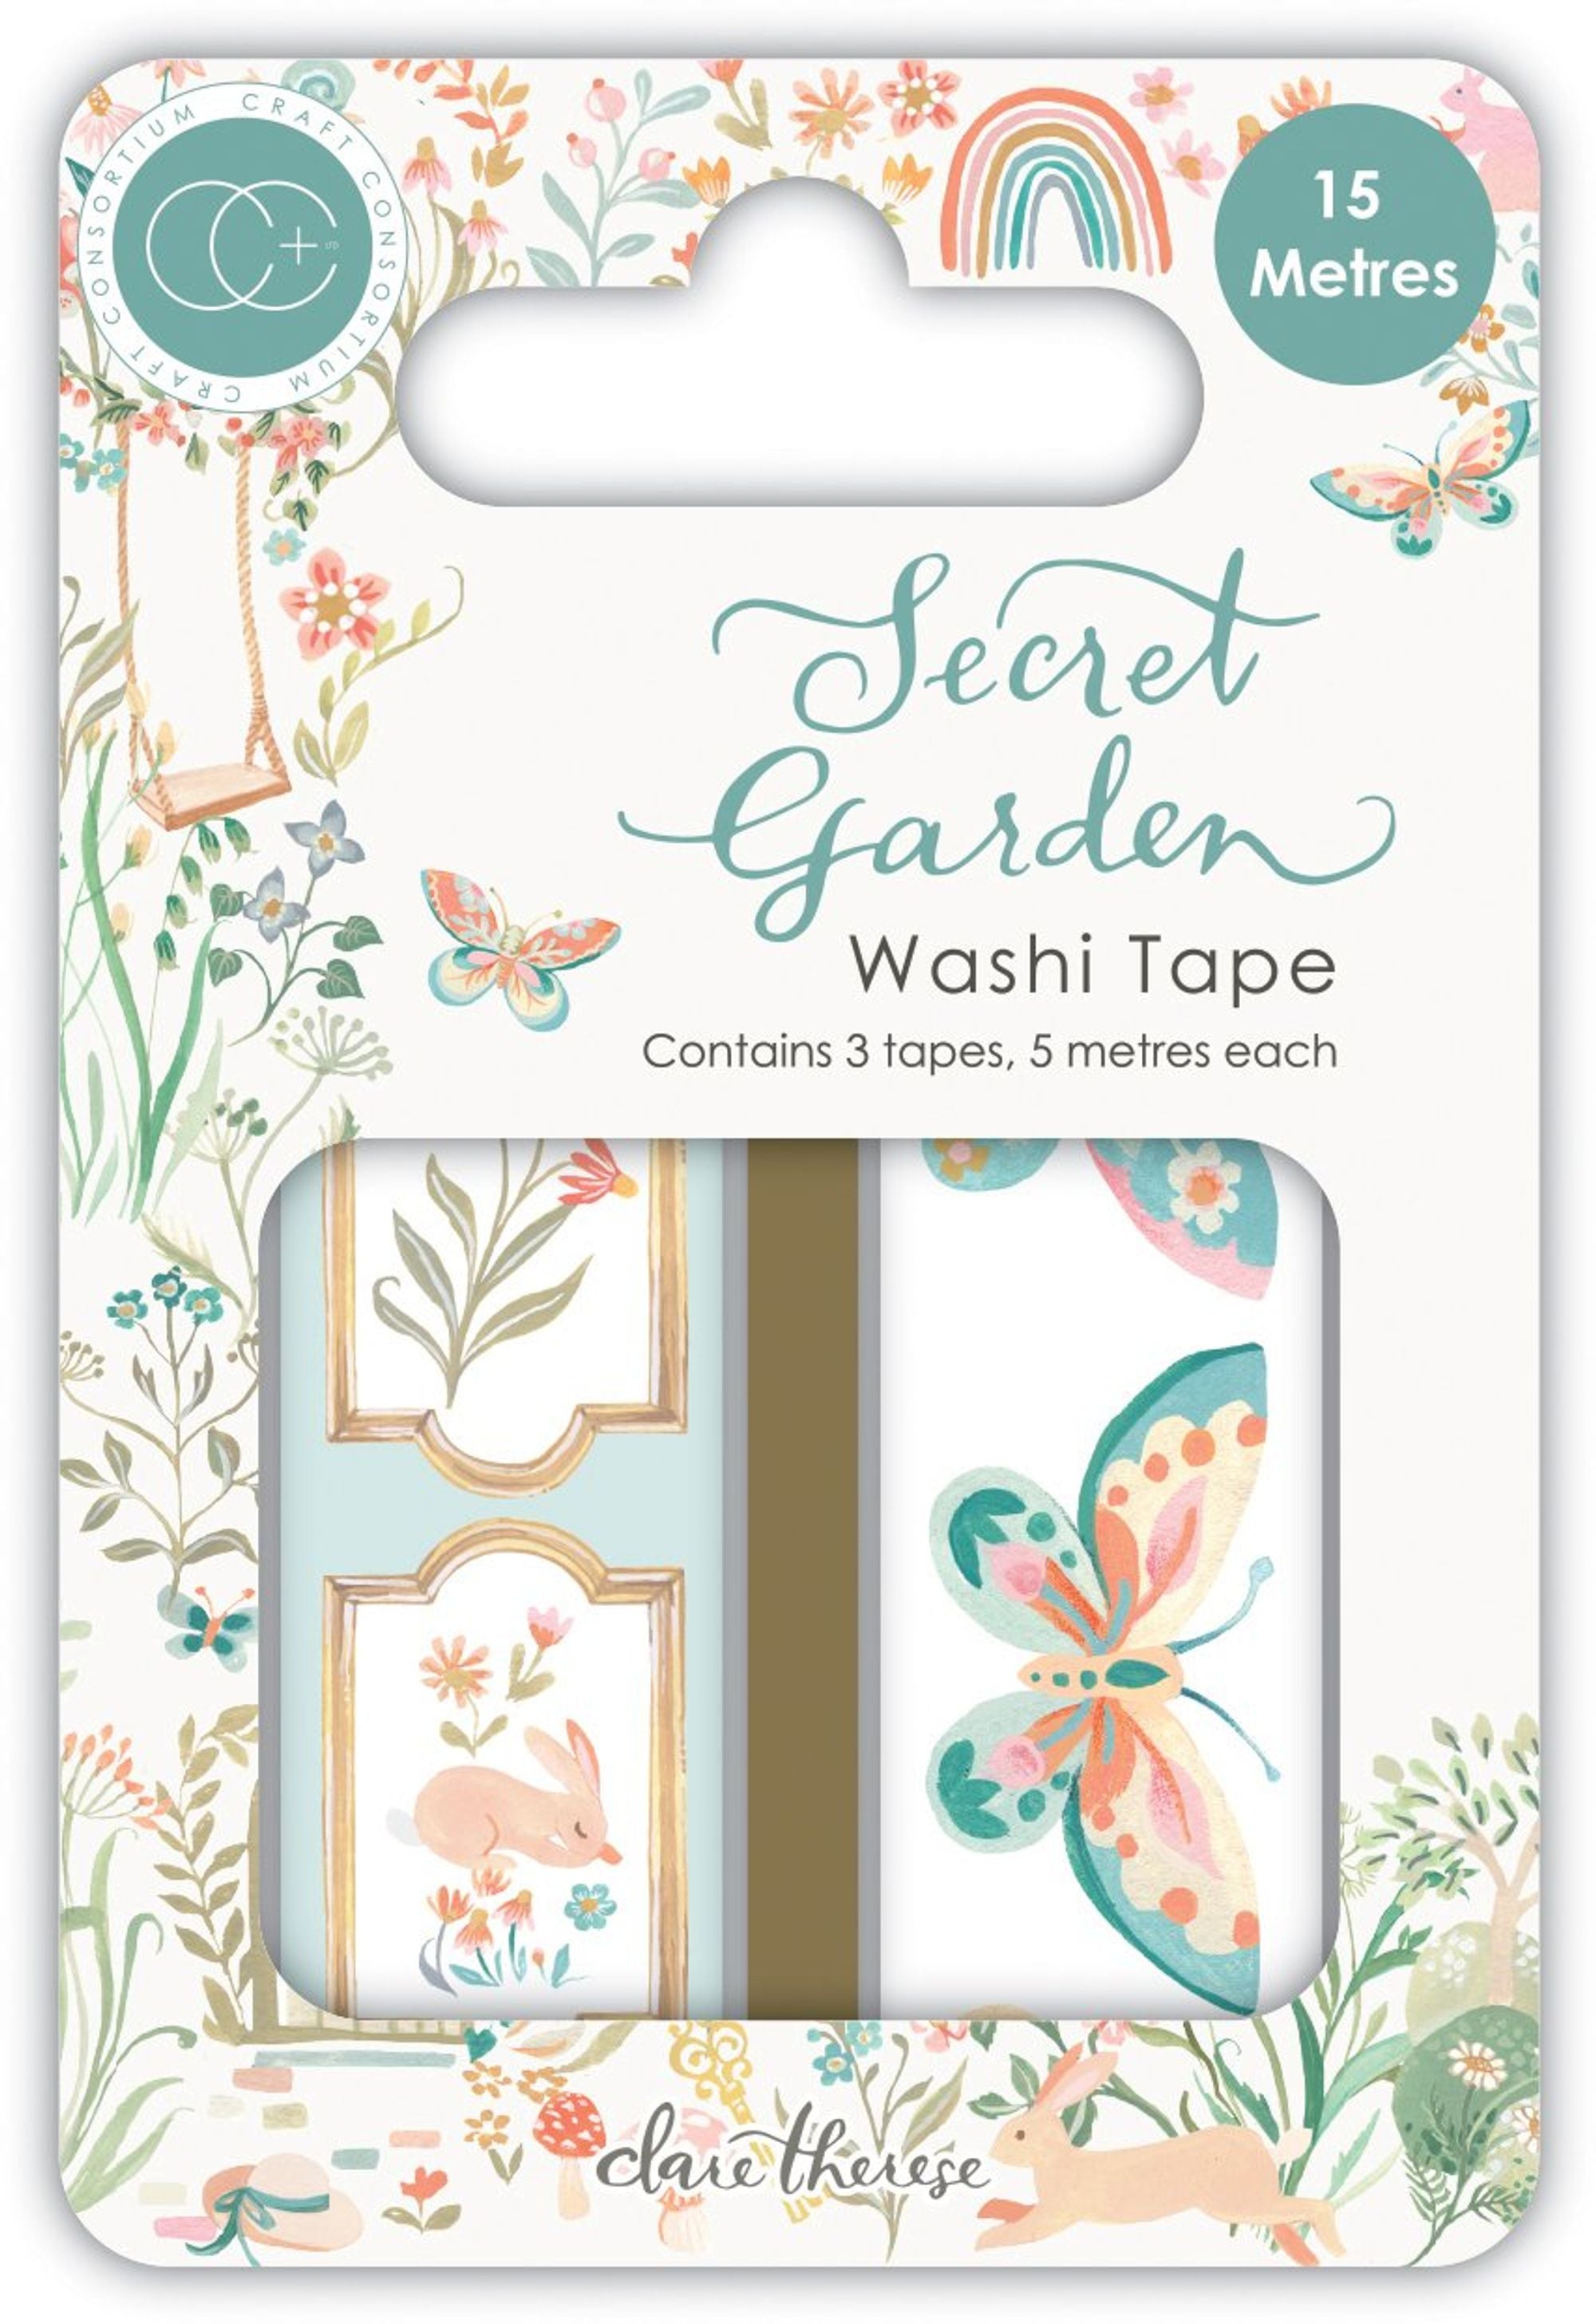 Secret Garden - Washi Tape